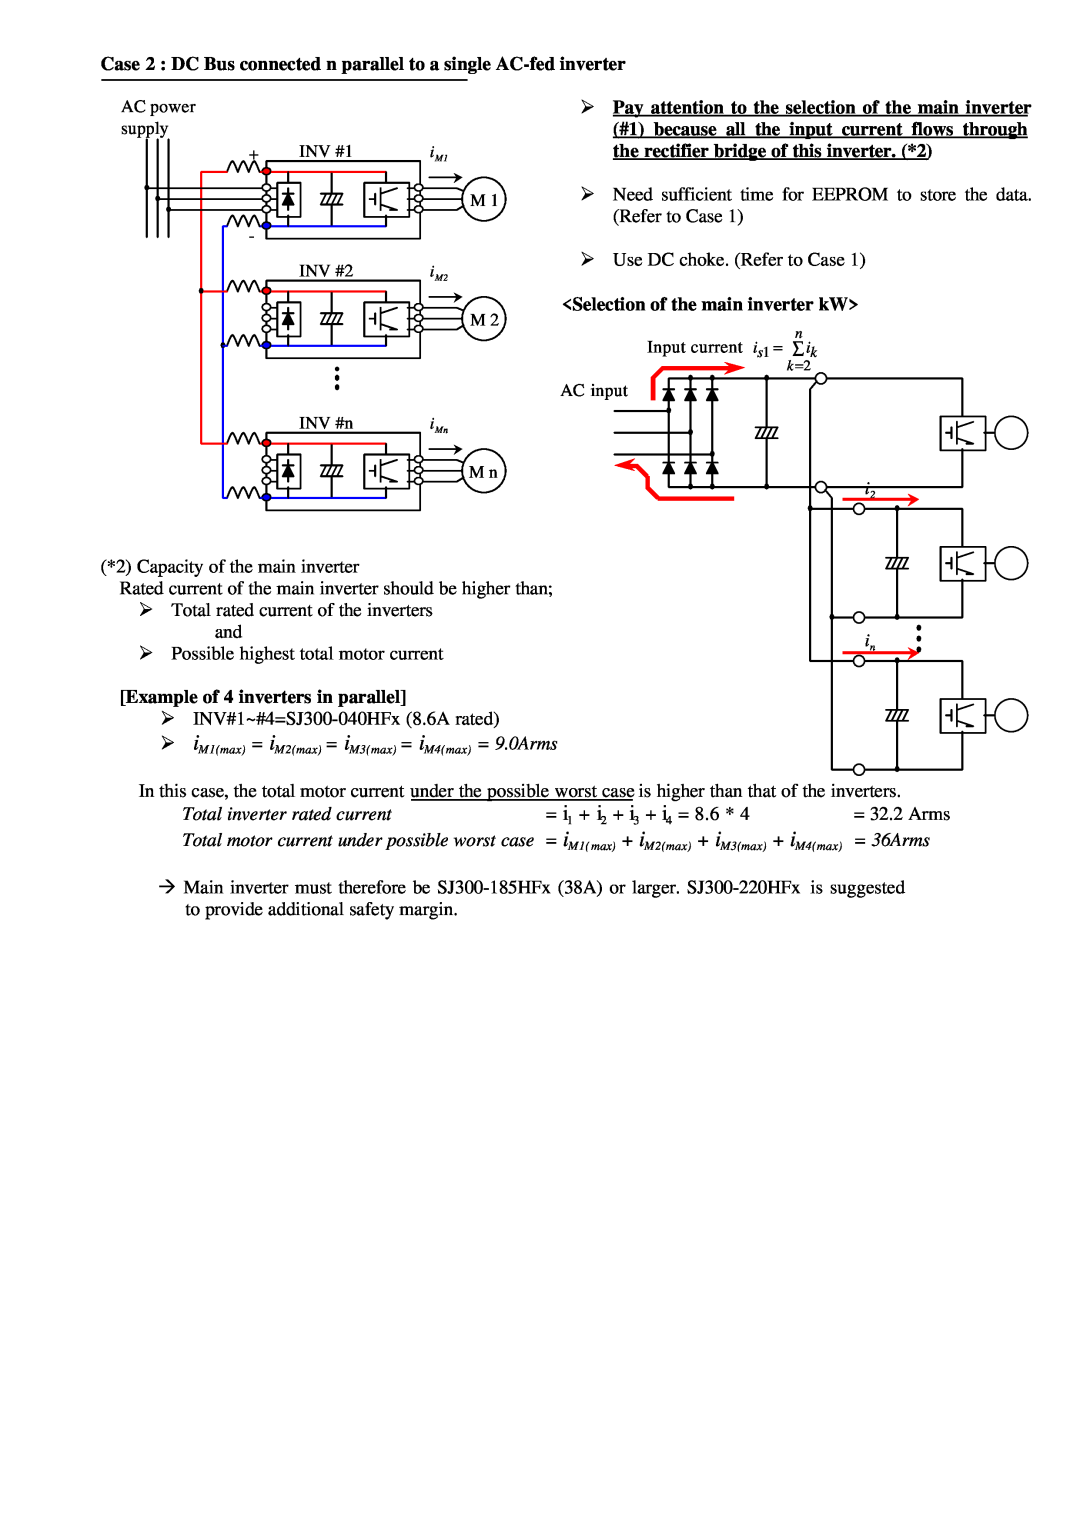 Hitachi AN091802-1 the rectifier bridge of this inverter. *2, Ø Use DC choke. Refer to Case, = i1 + i2 + i3 + i4 = 8.6 